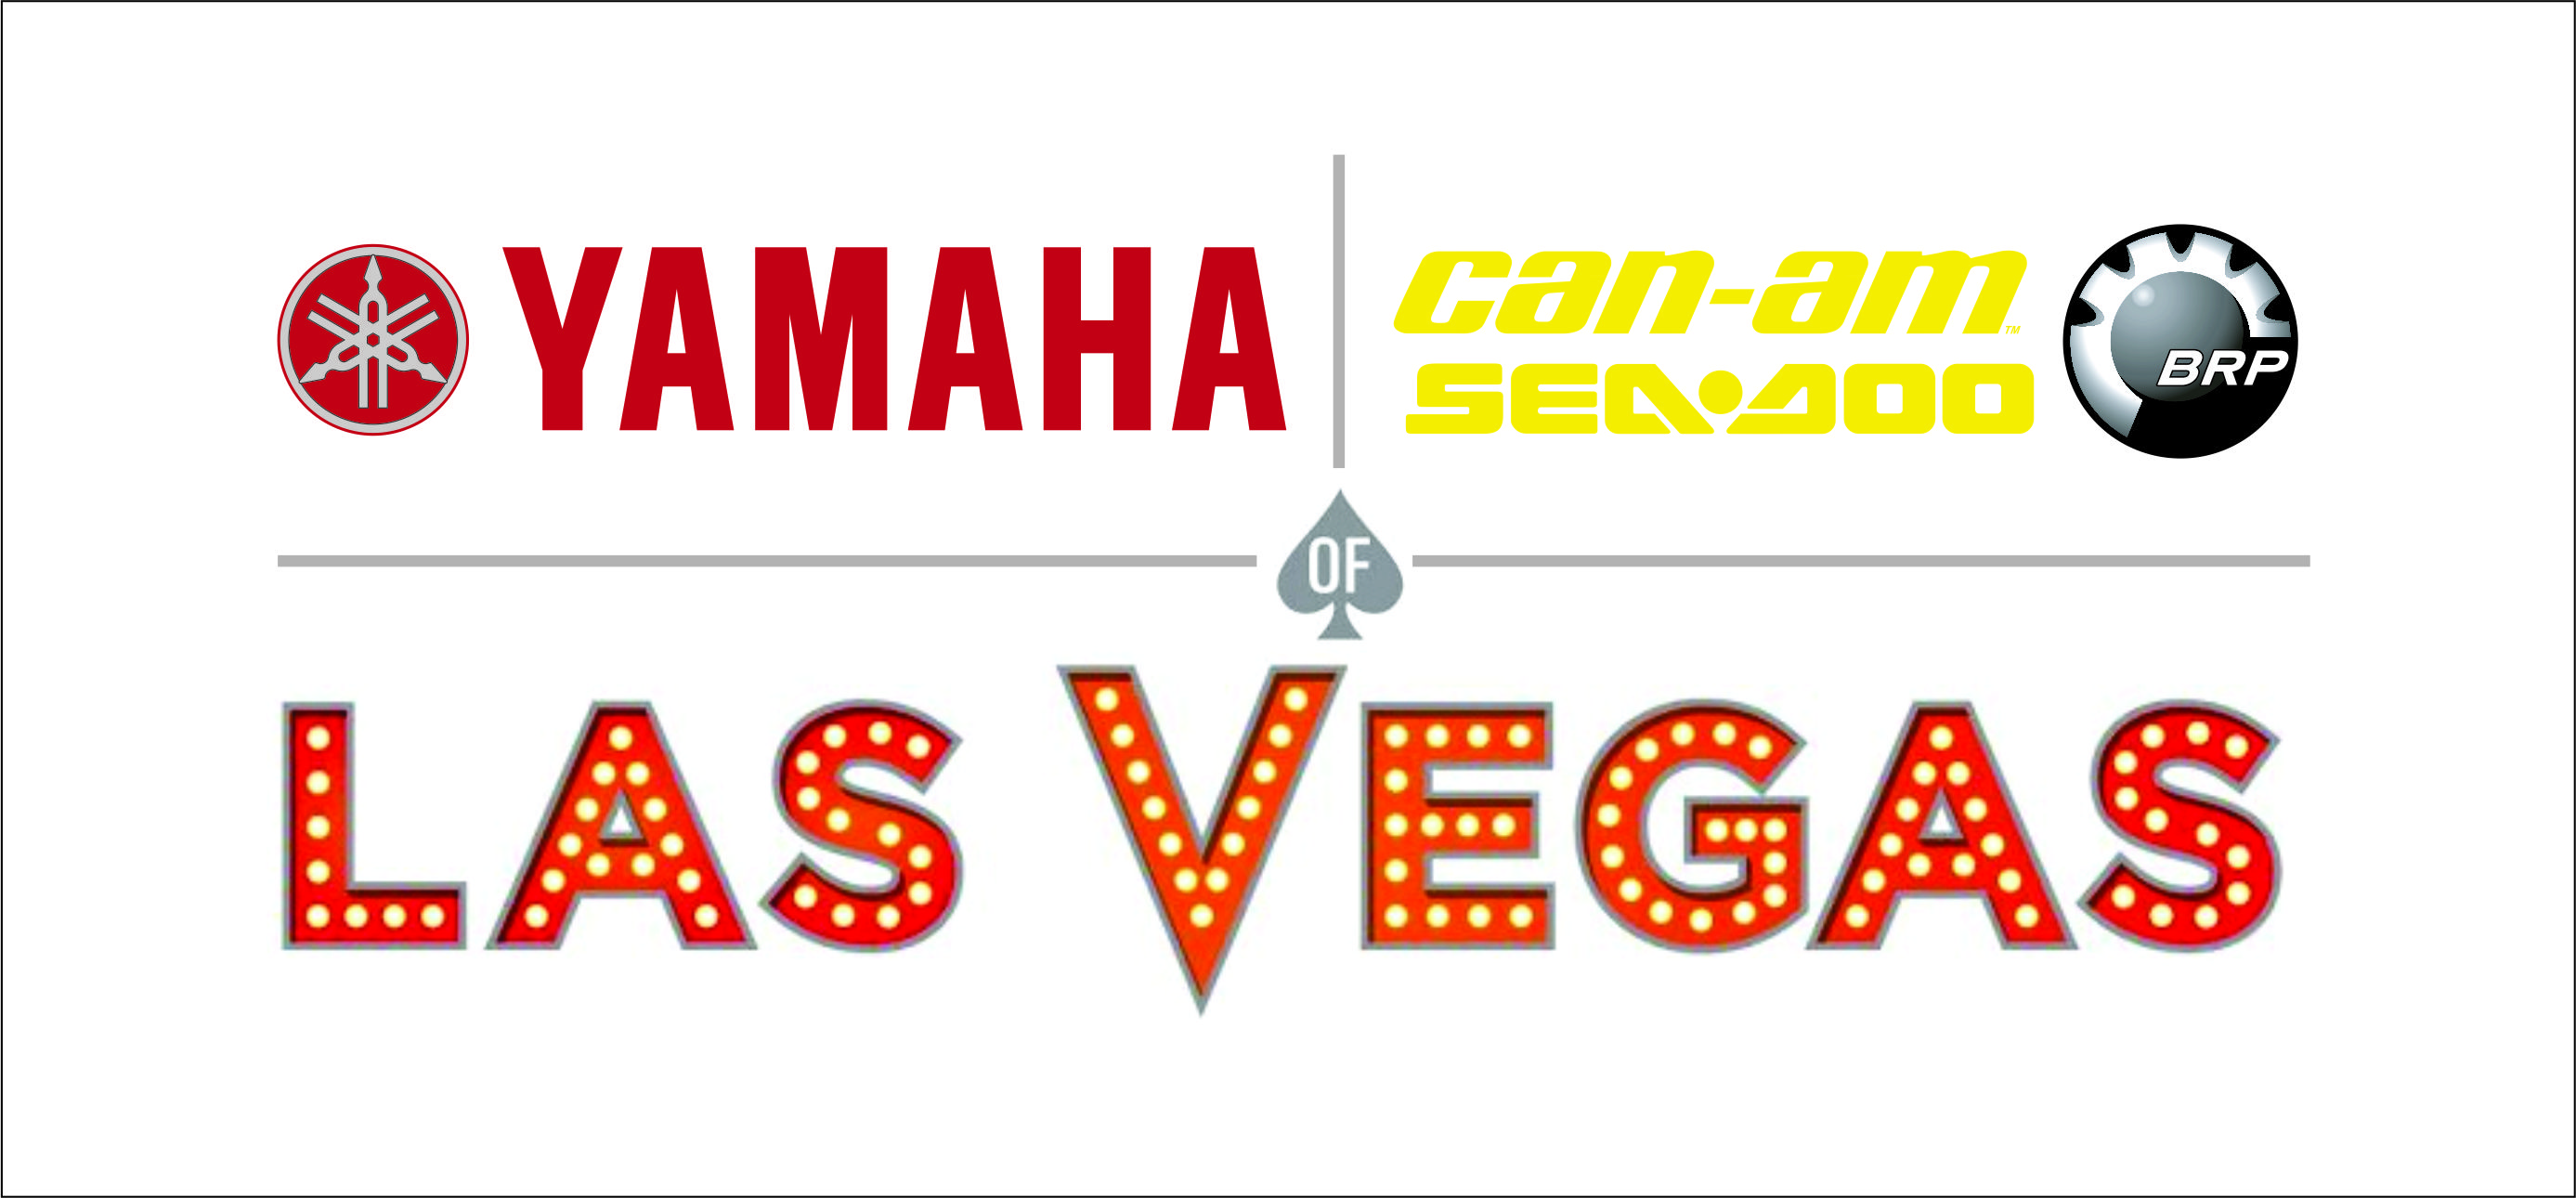 Yamaha of Las Vegas